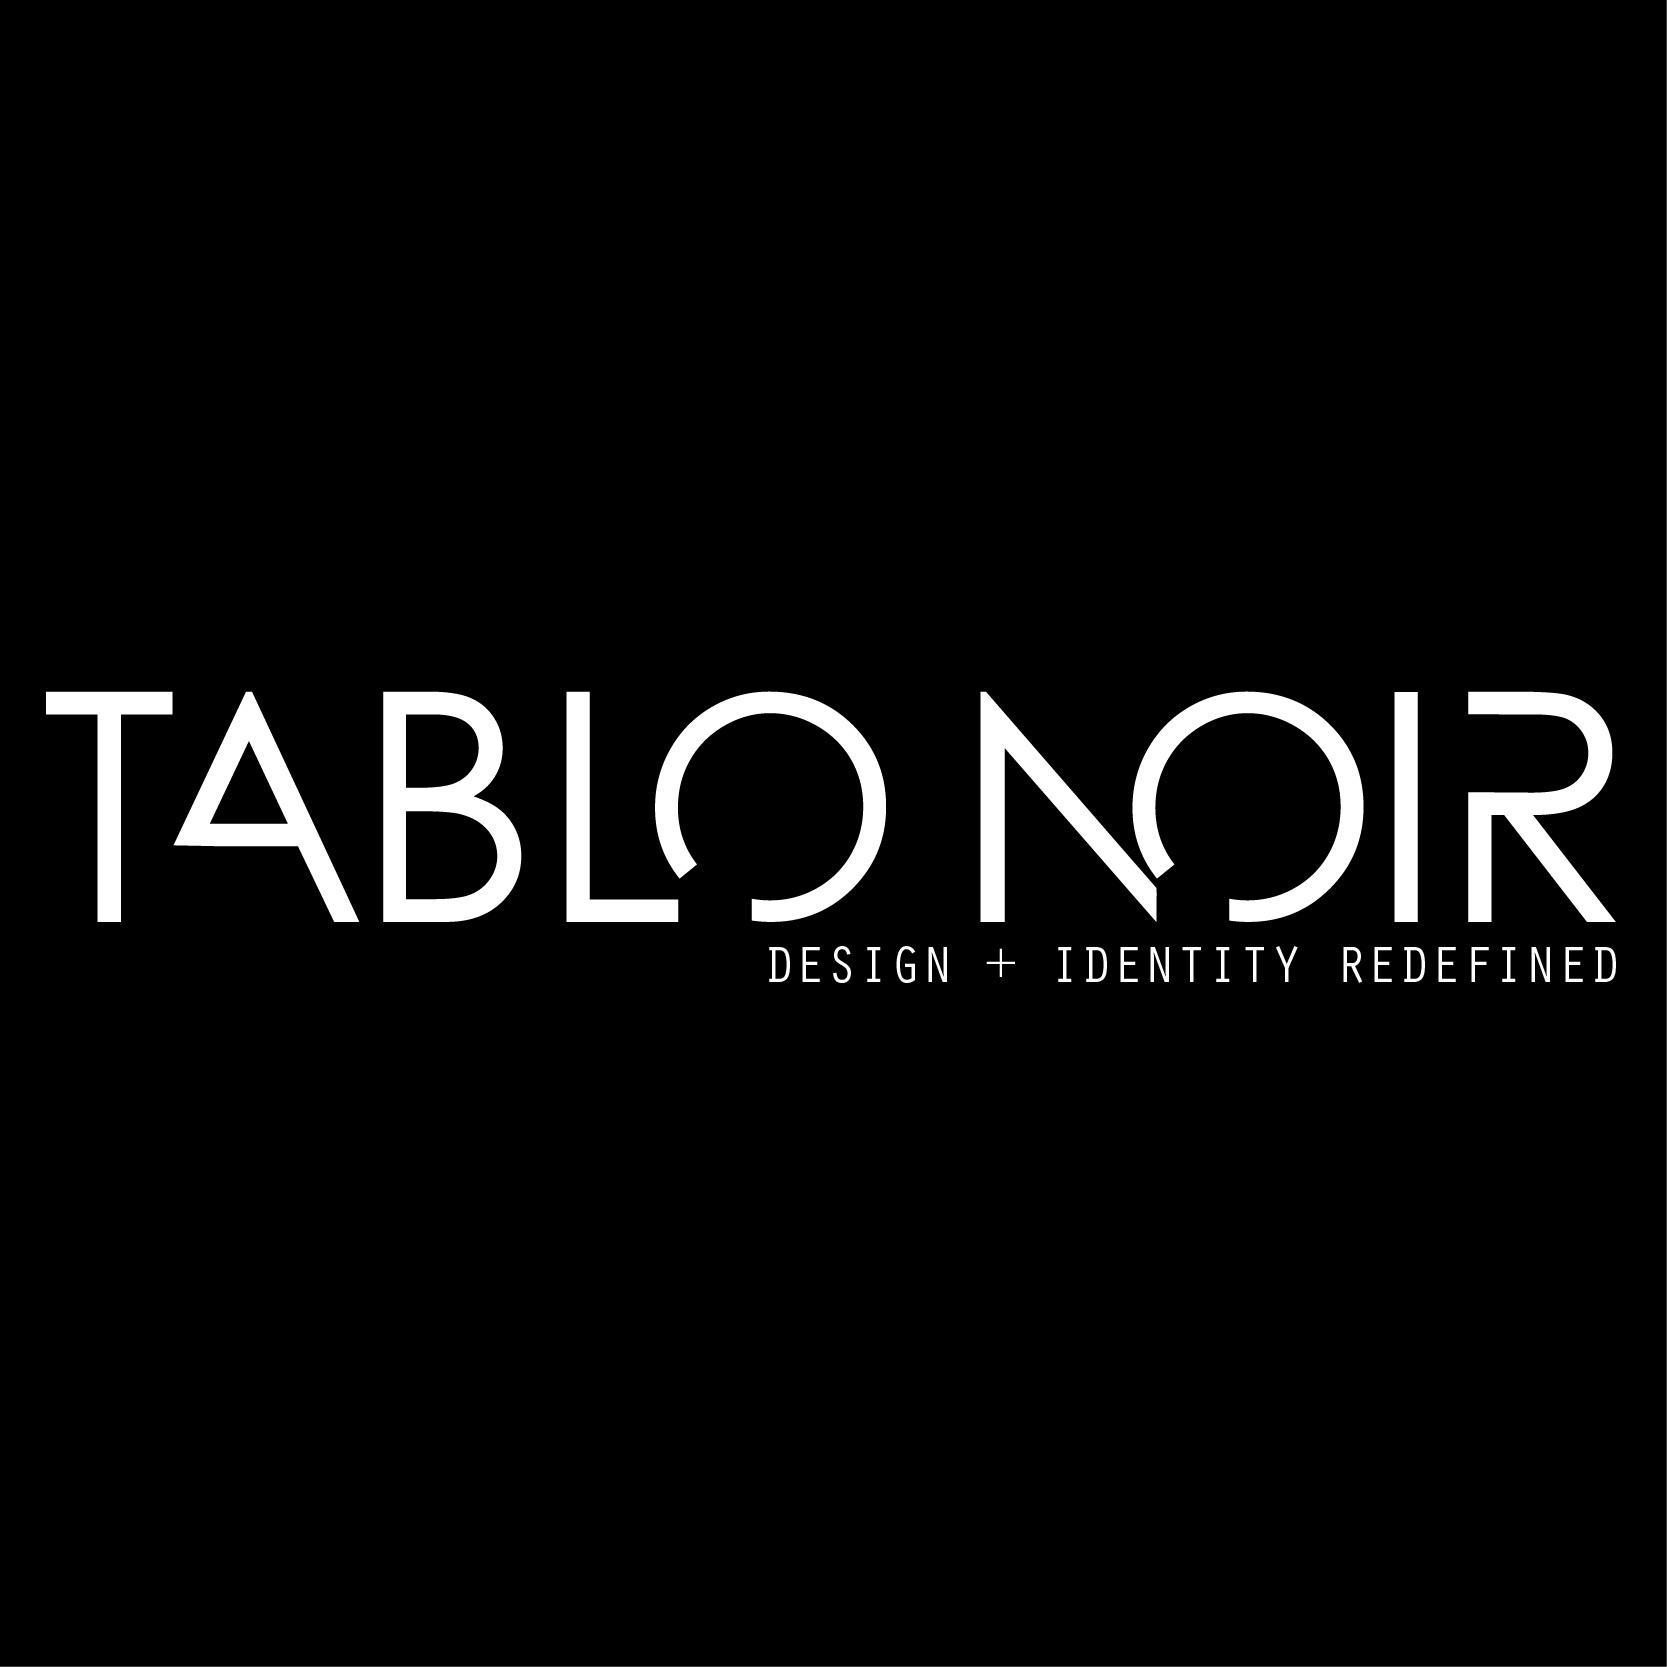 Tablo Noir Branding & Design Agency profile on Qualified.One